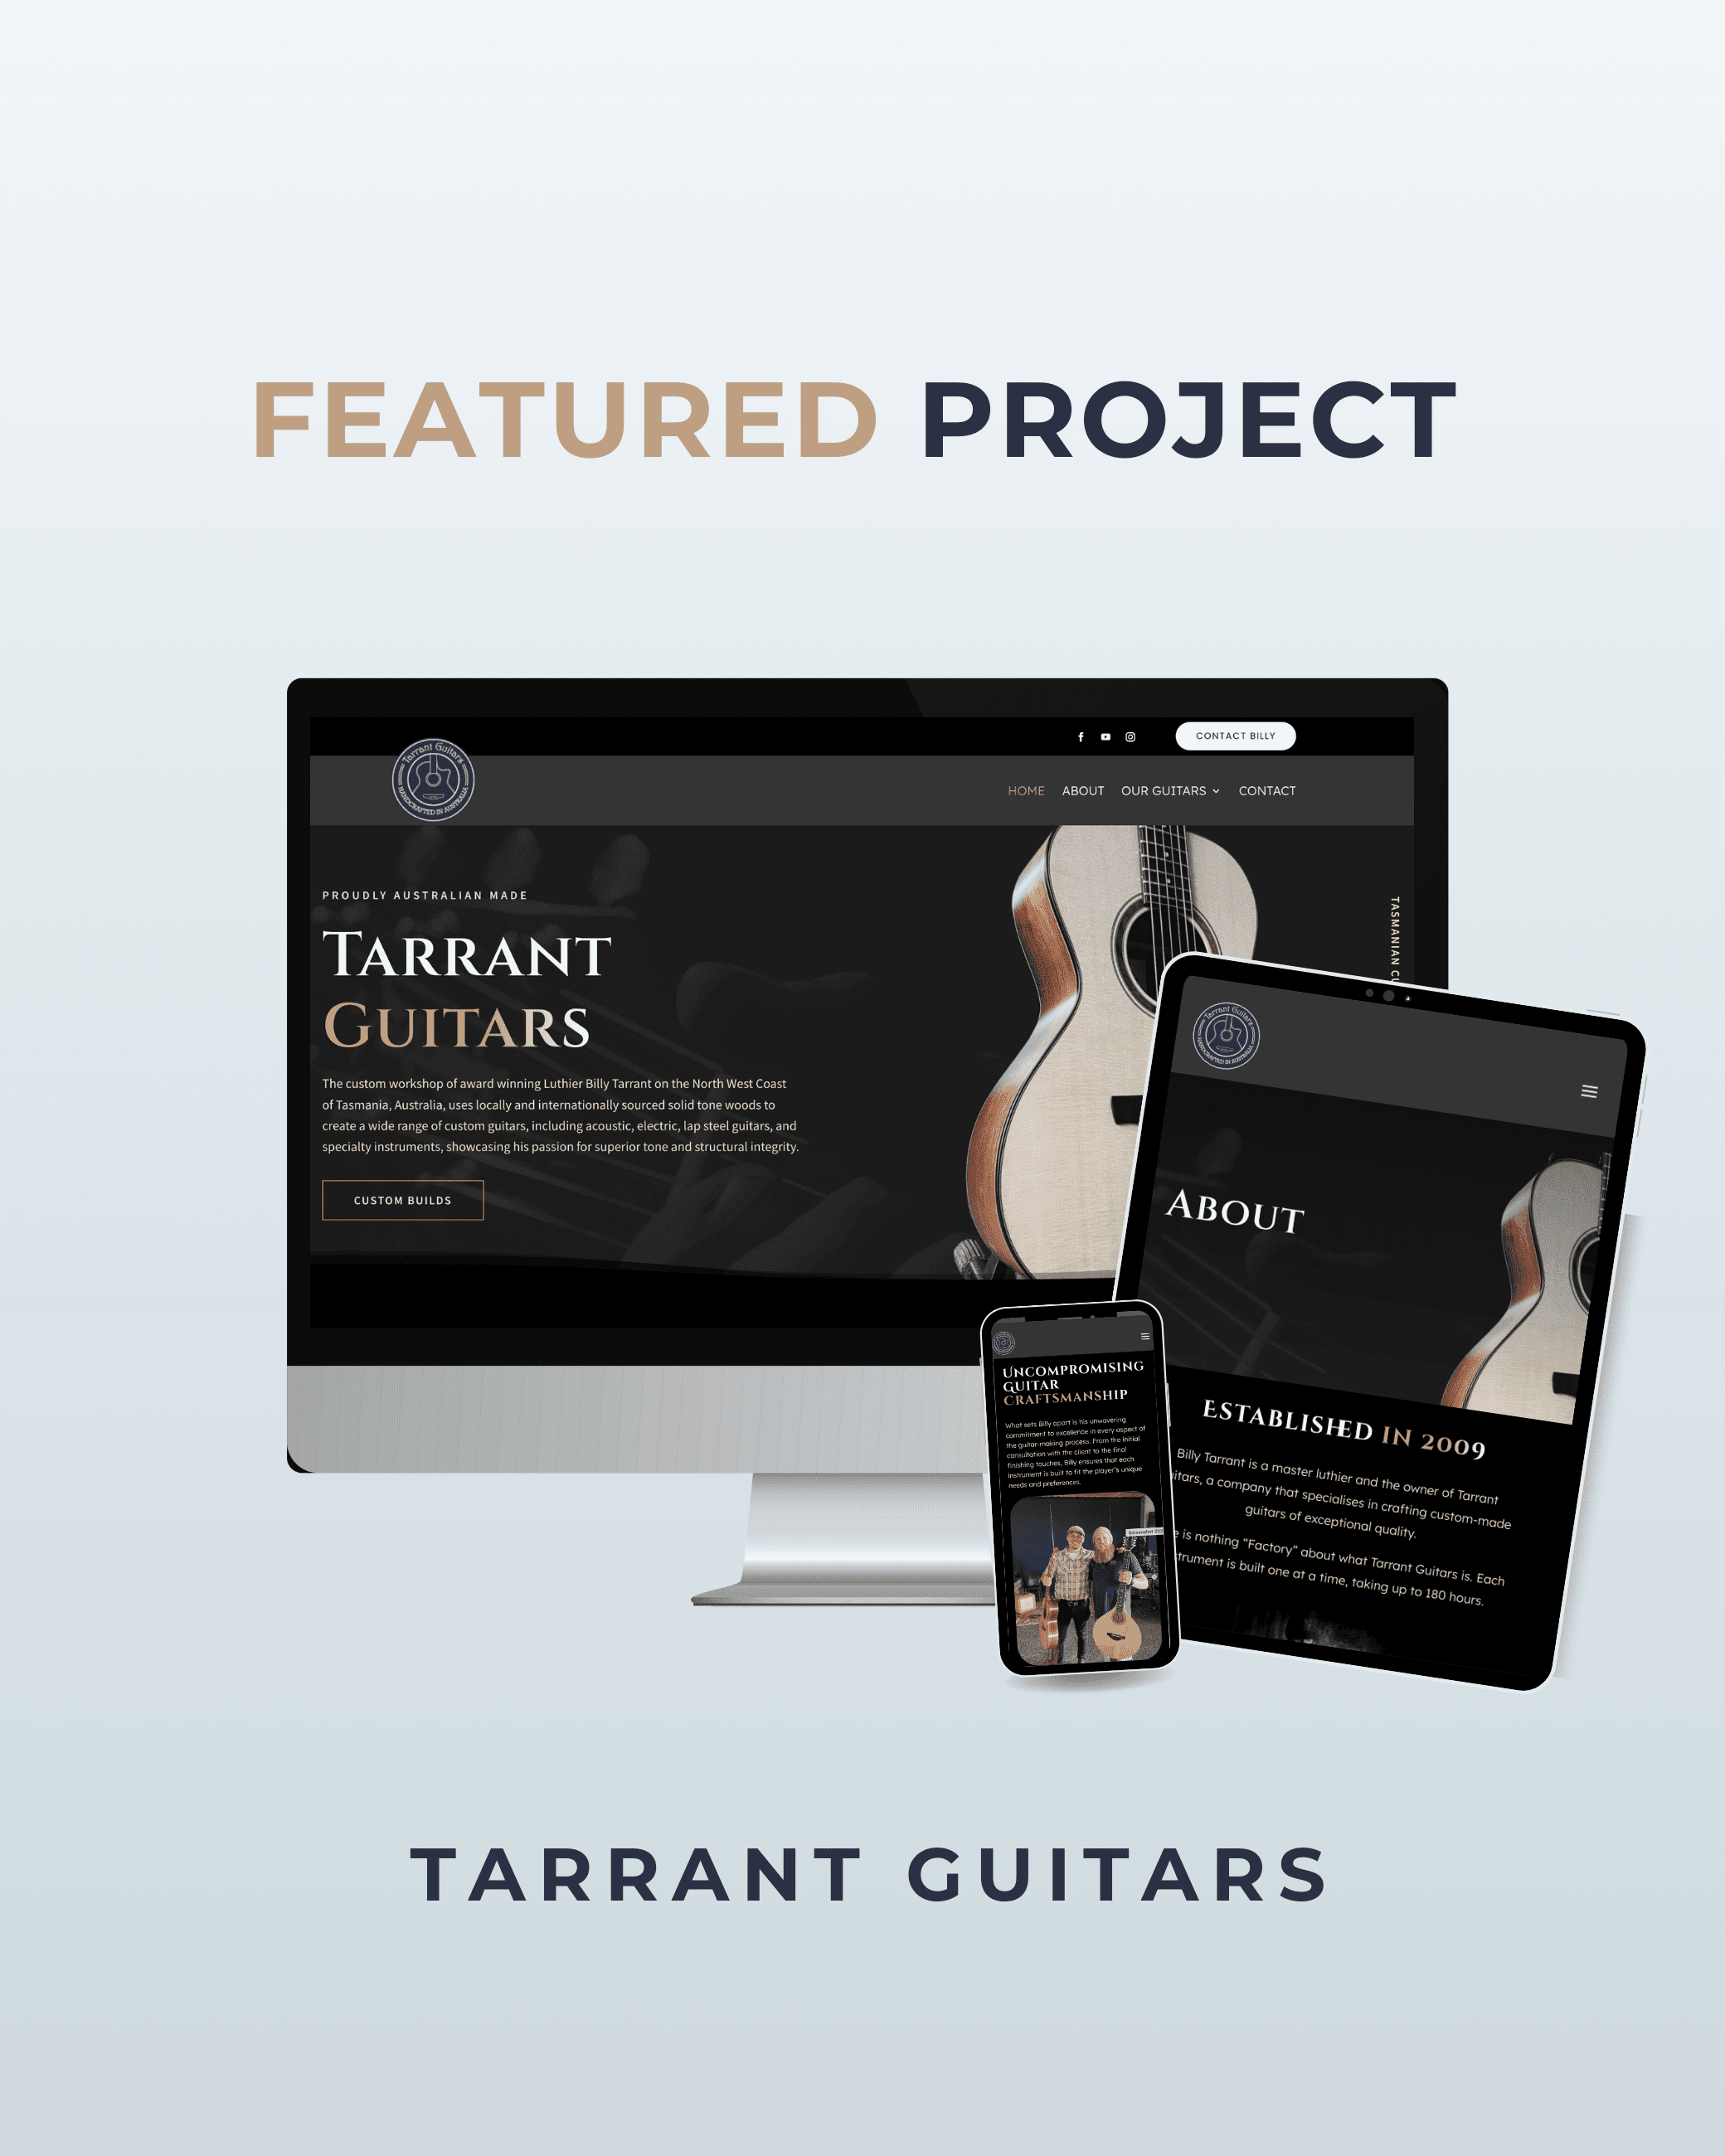 Refreshing the Tarrant Guitars Website